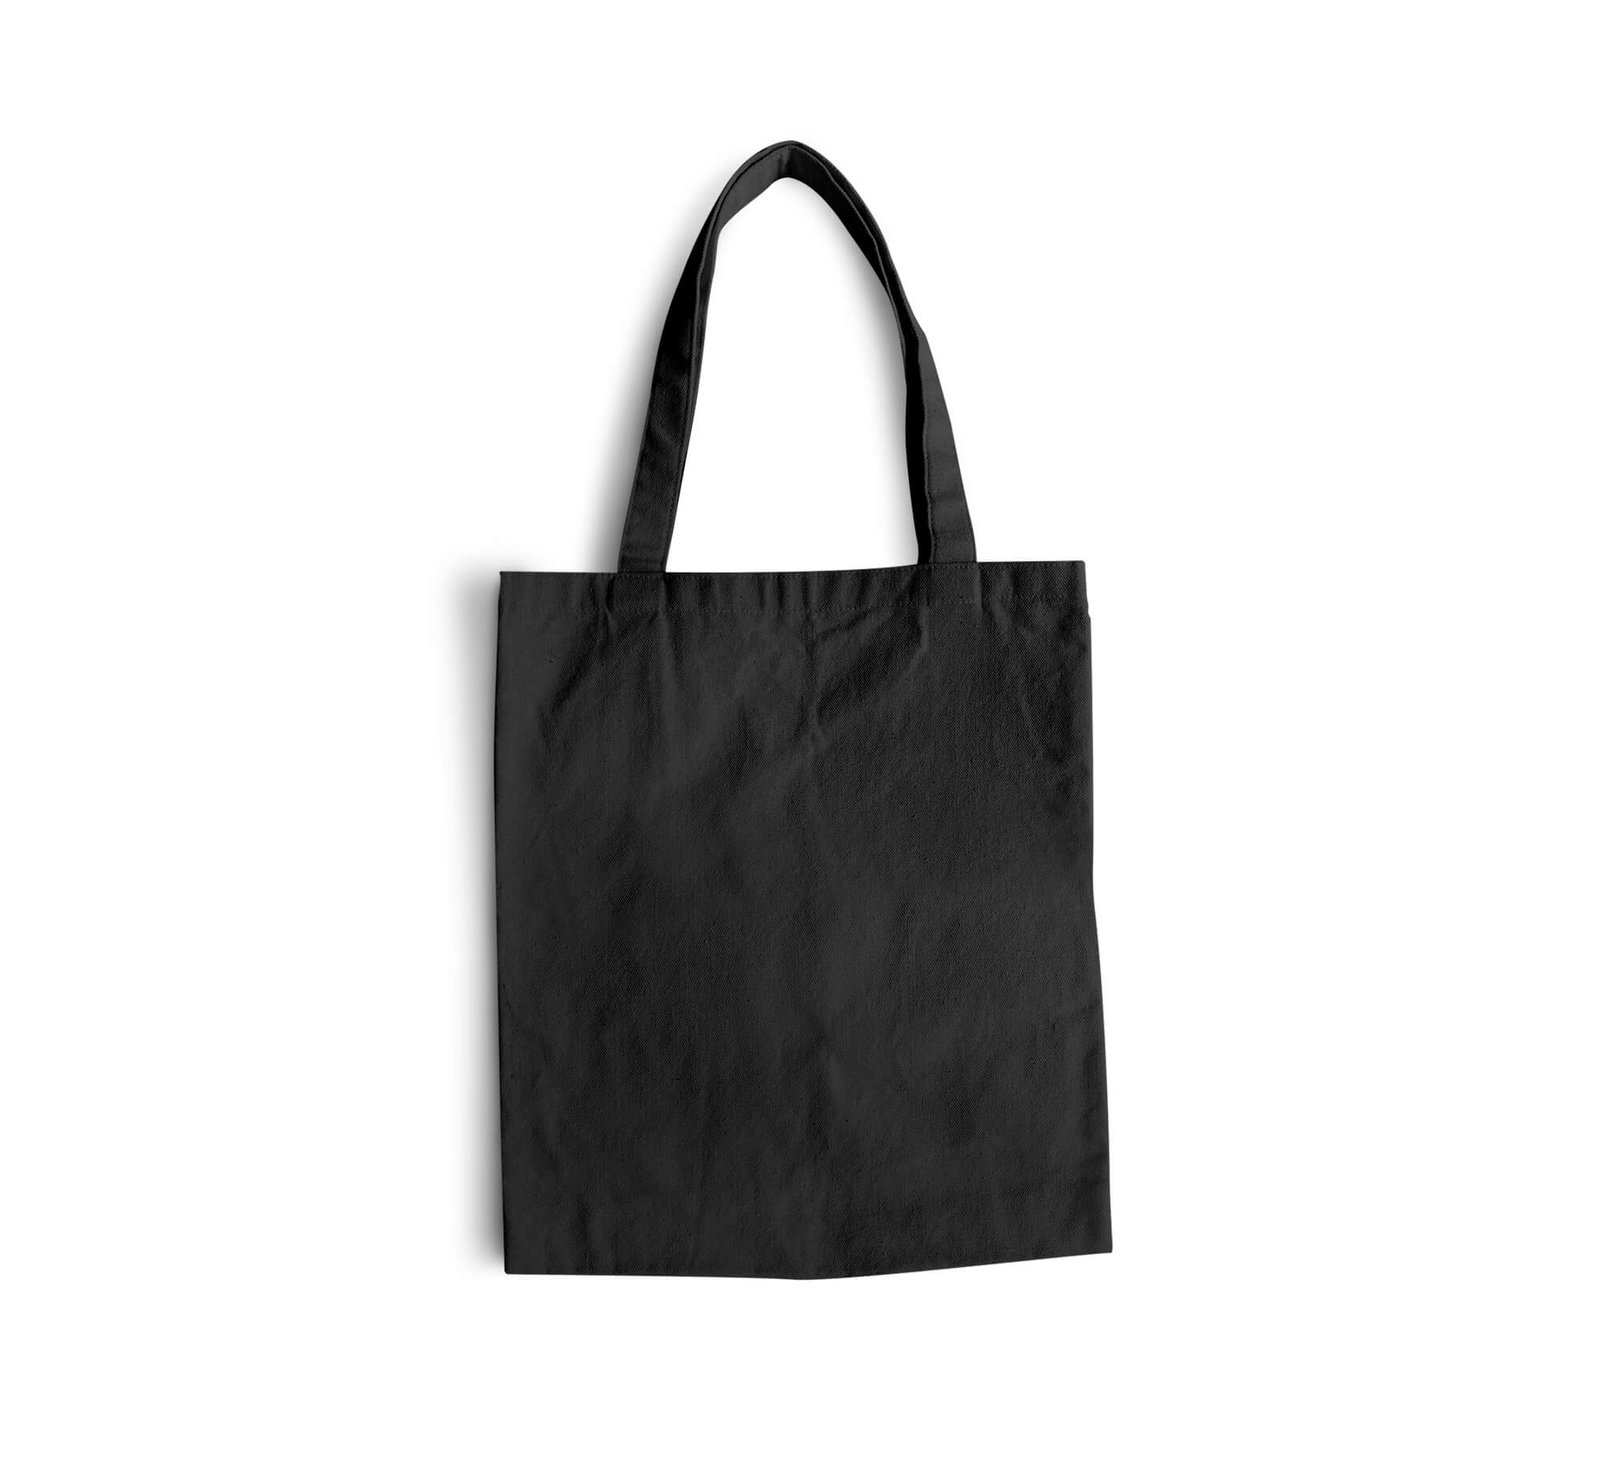 Blank Free Black Tote Bag Mockup PSD Template